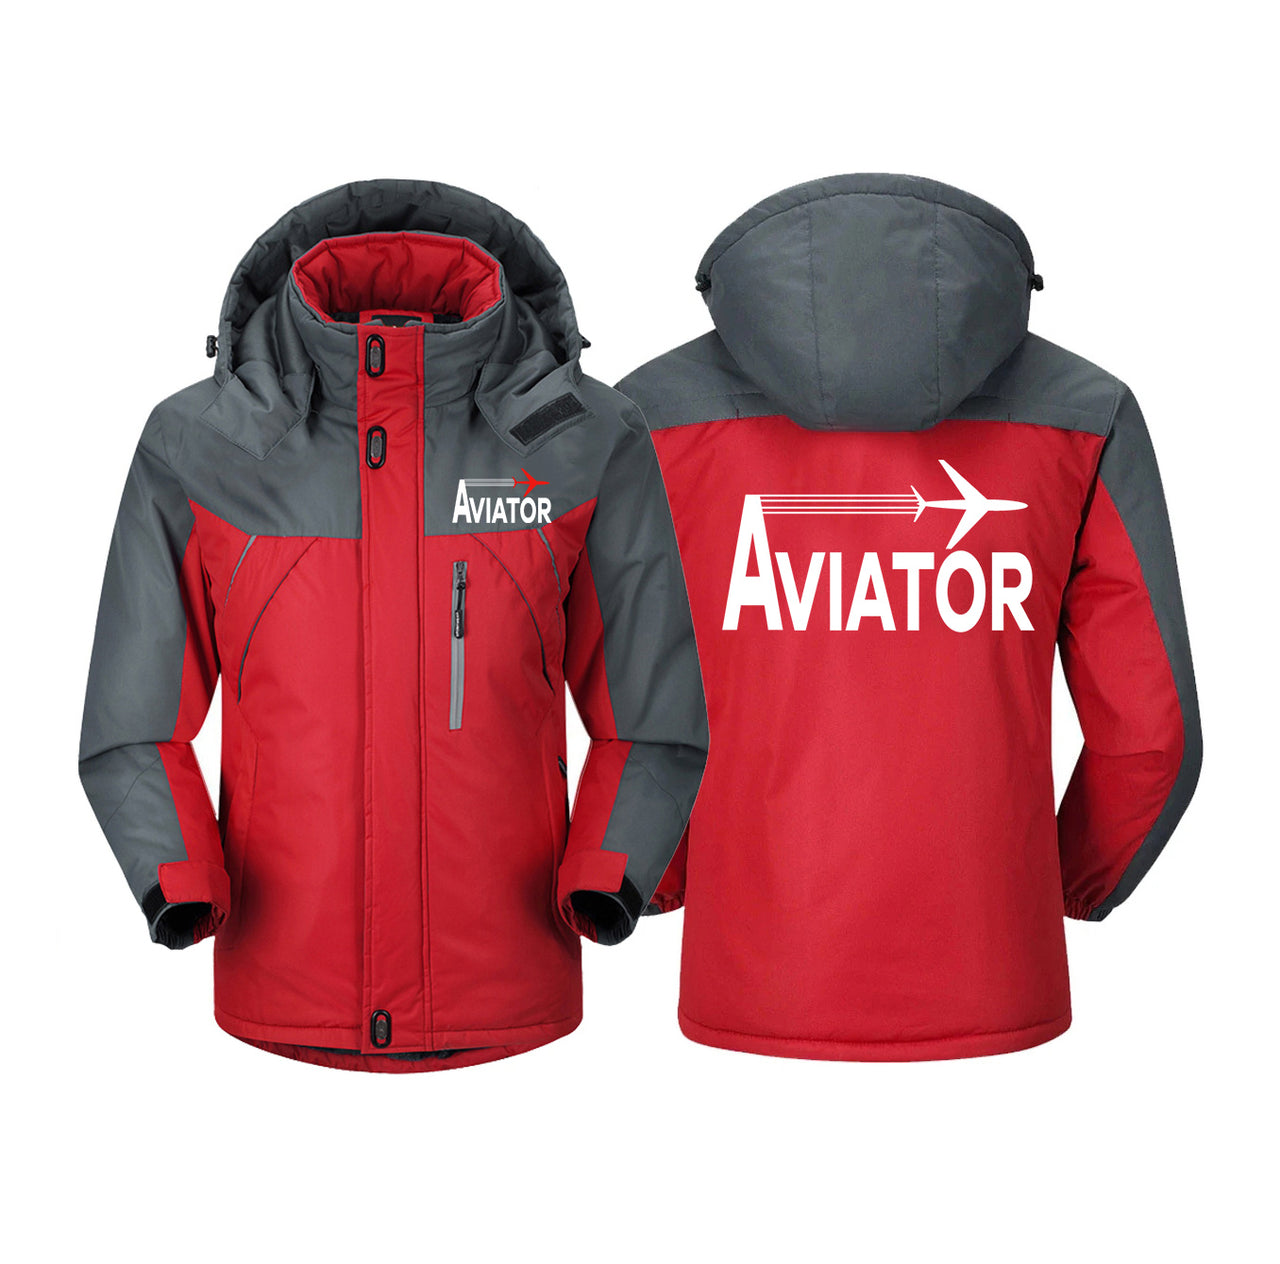 Aviator Designed Thick Winter Jackets